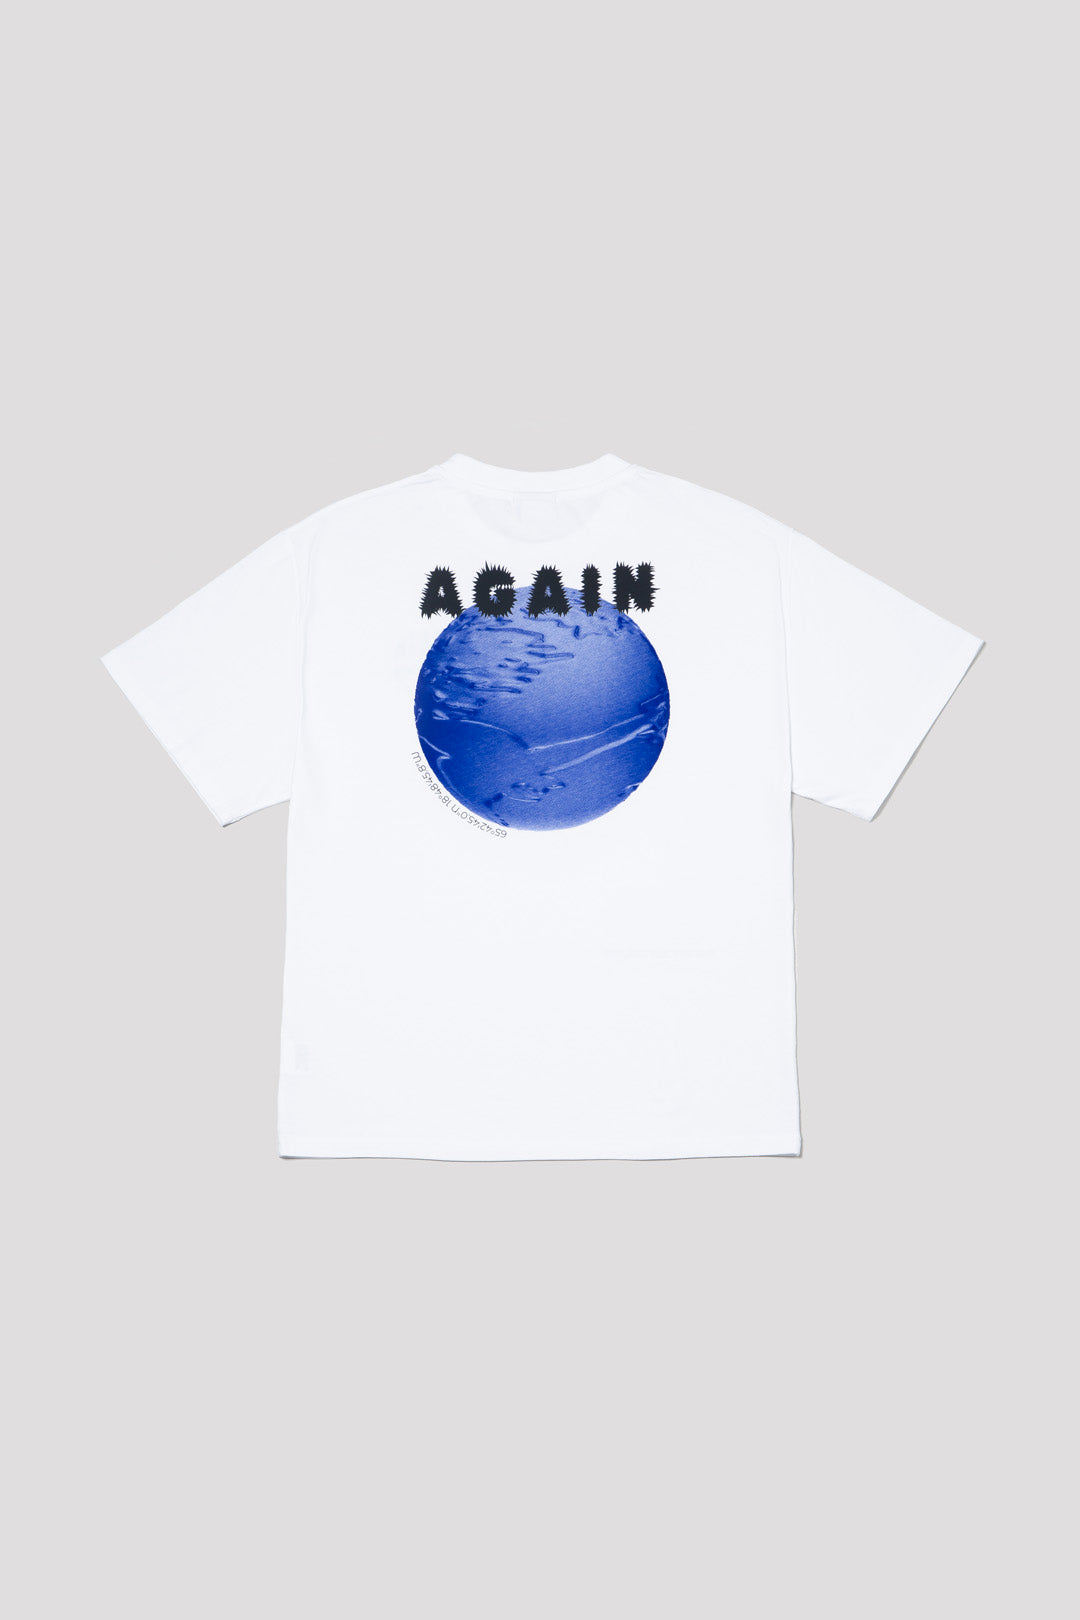 T-shirt blue sphere